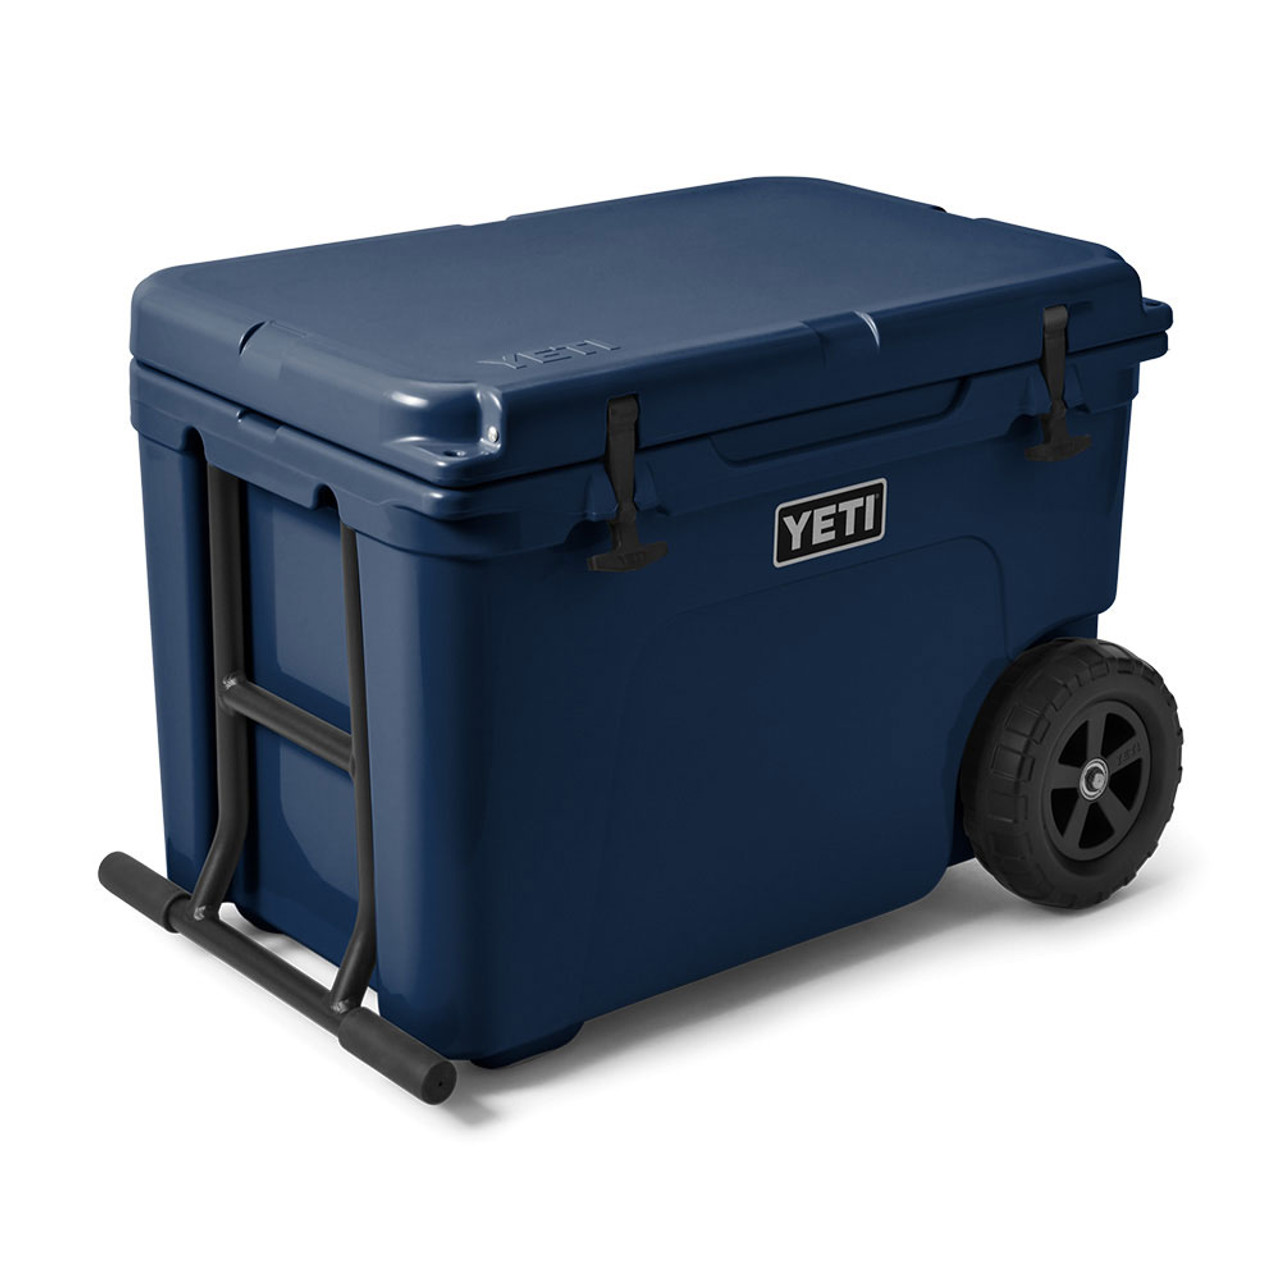 YETI Tundra Haul Limited Edition Wheeled Cooler - Reef Blue